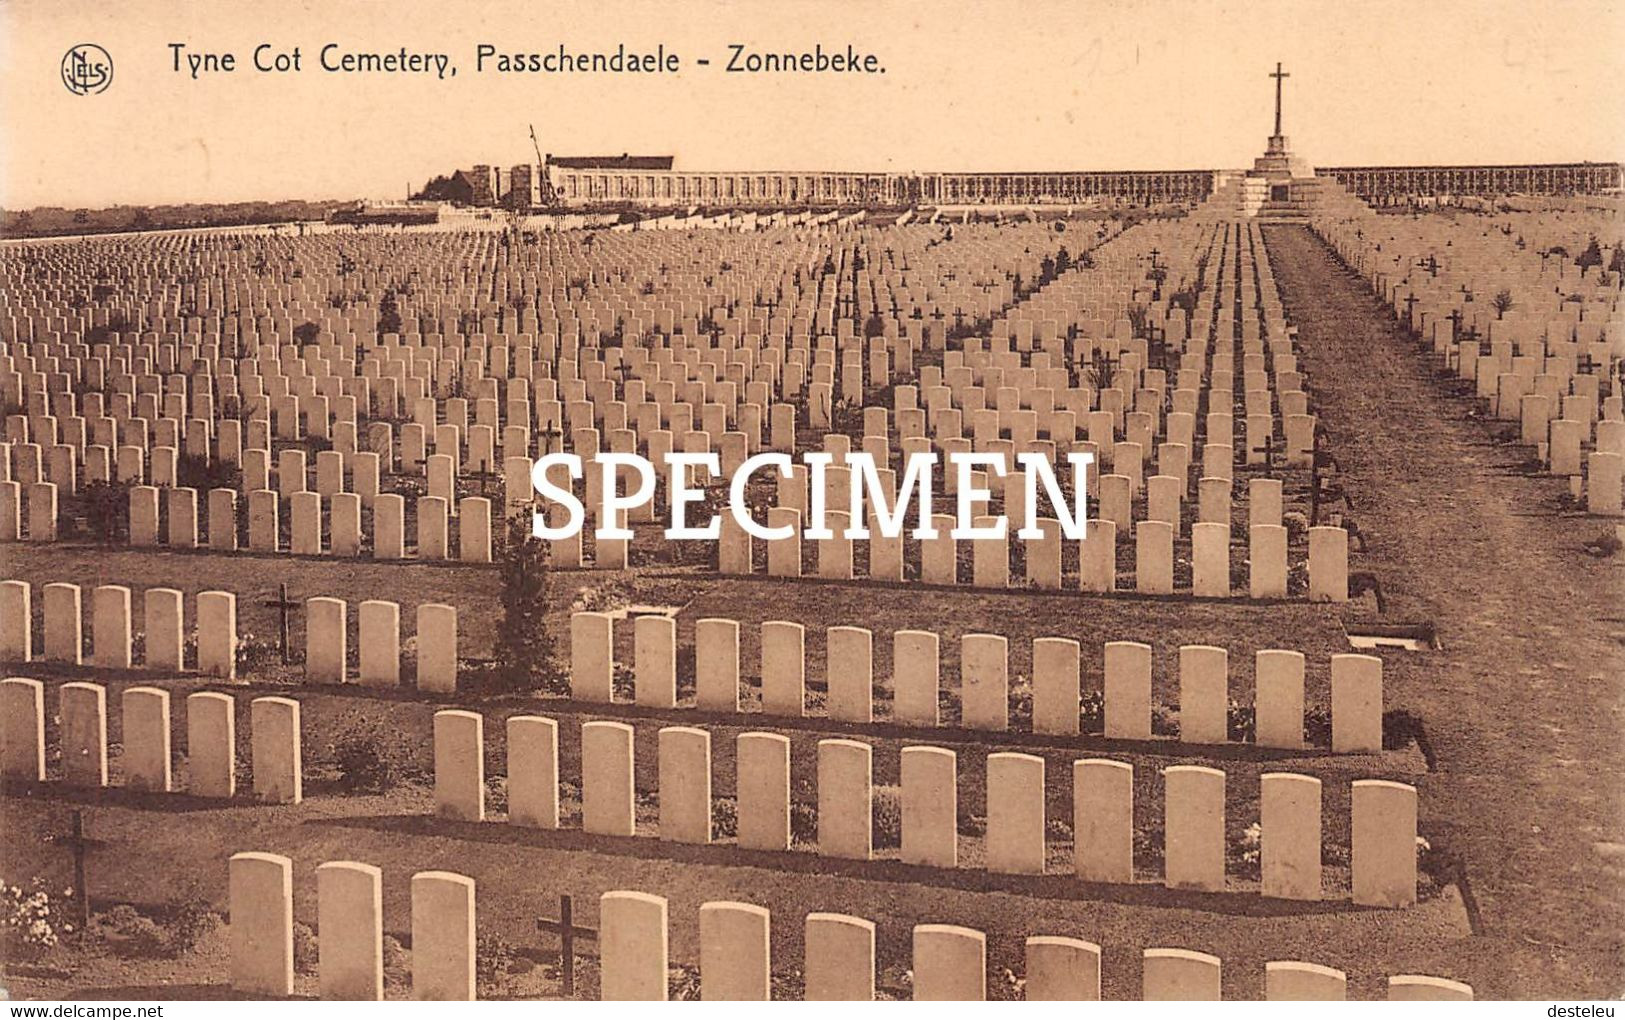 Tyne Cot Cemetery - Passchendaele - Zonnebeke - Zonnebeke